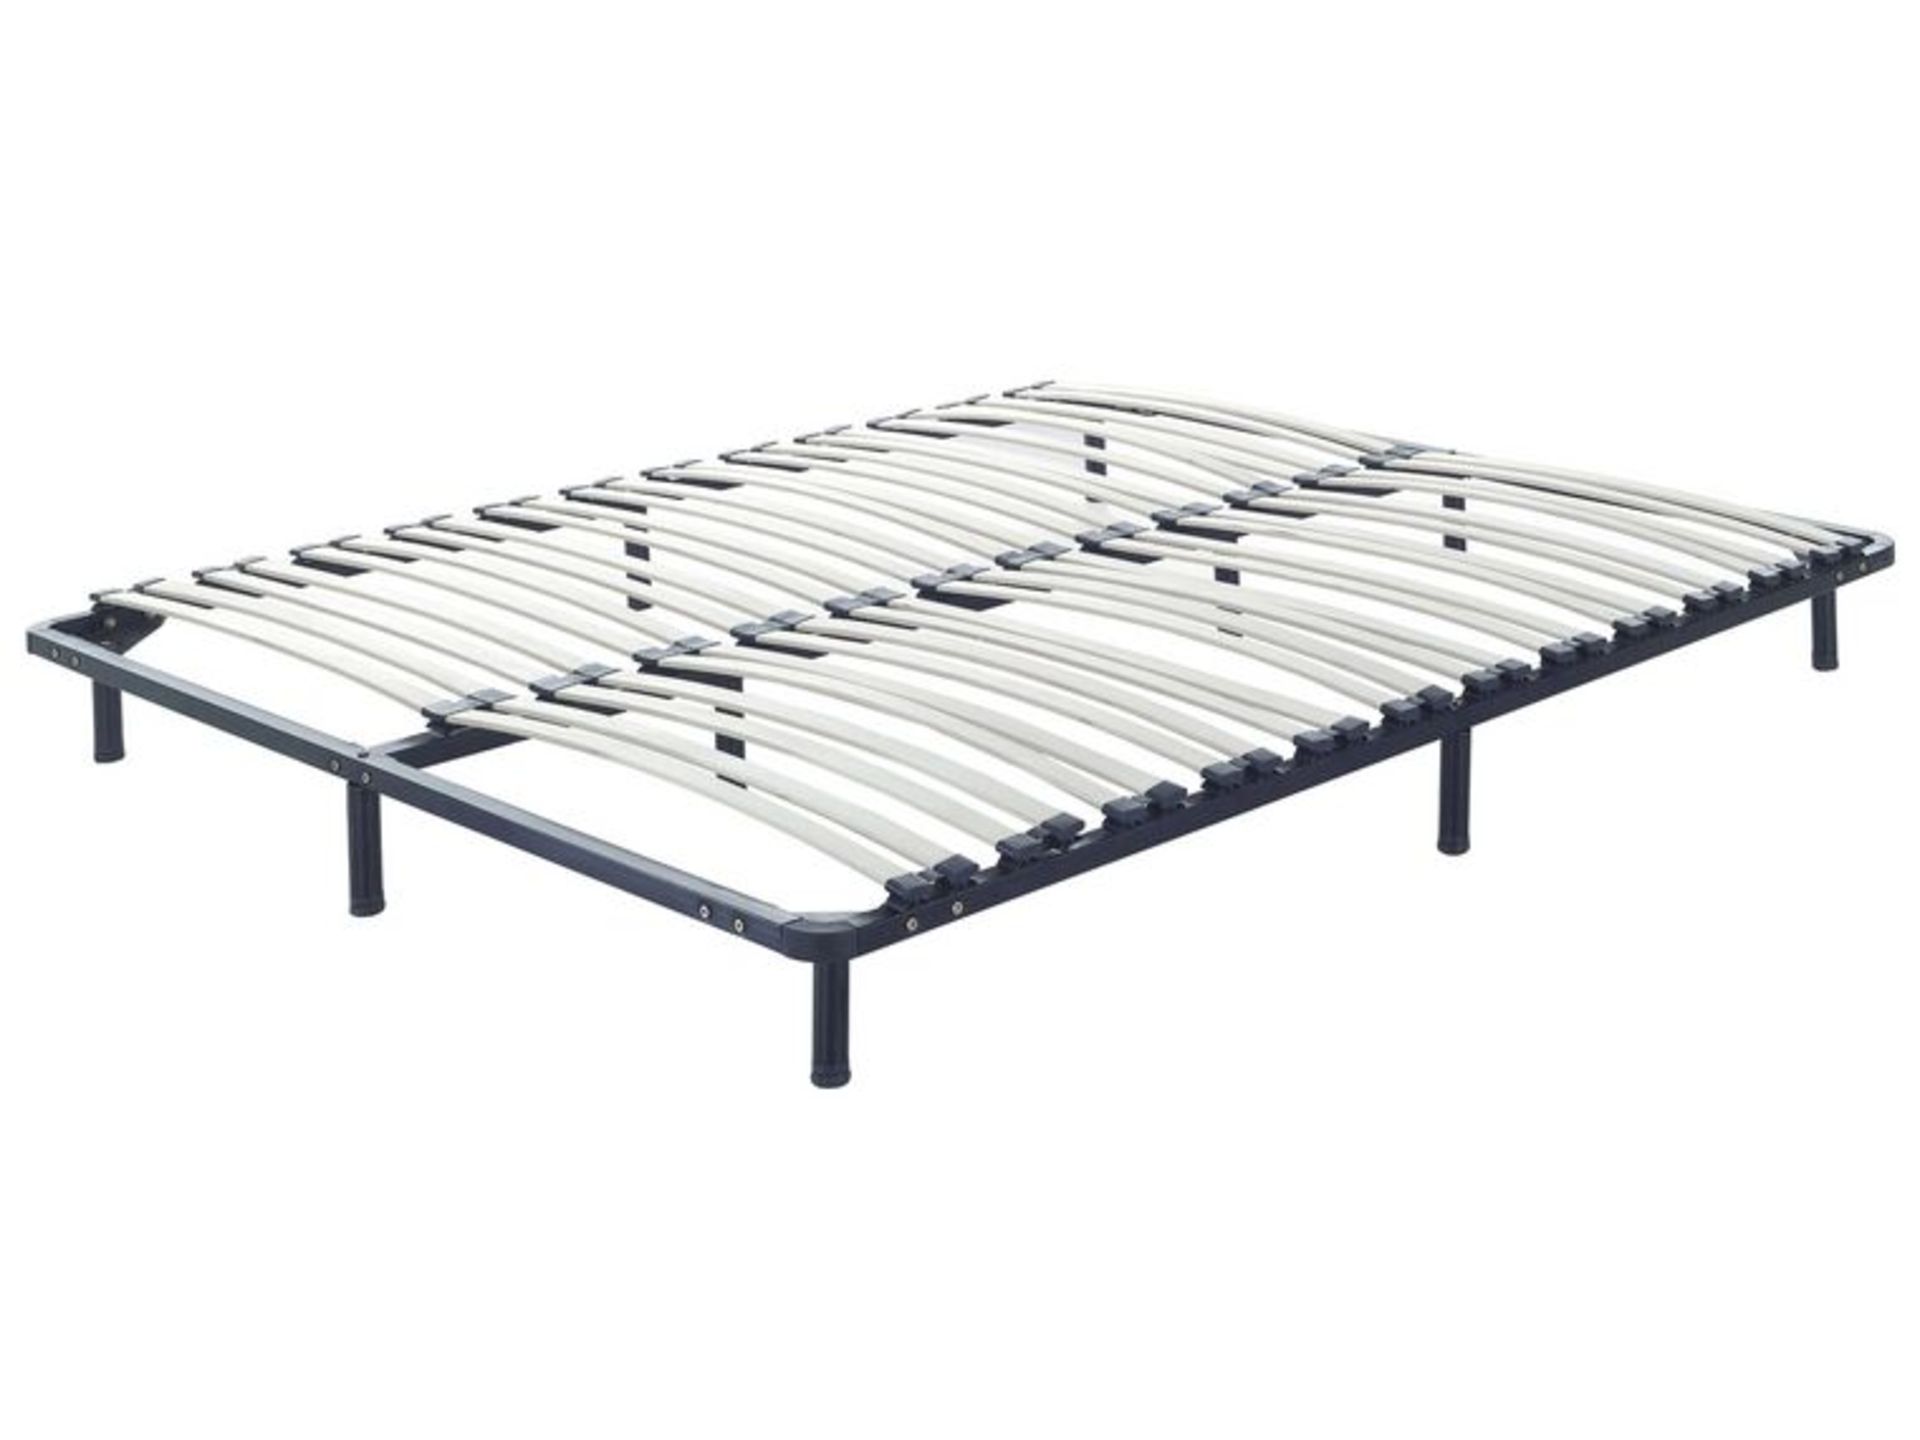 Combourg King Freestanding Slatted Bed Base. - SR6. RRP £259.99. Ensure your sleep is comfortable